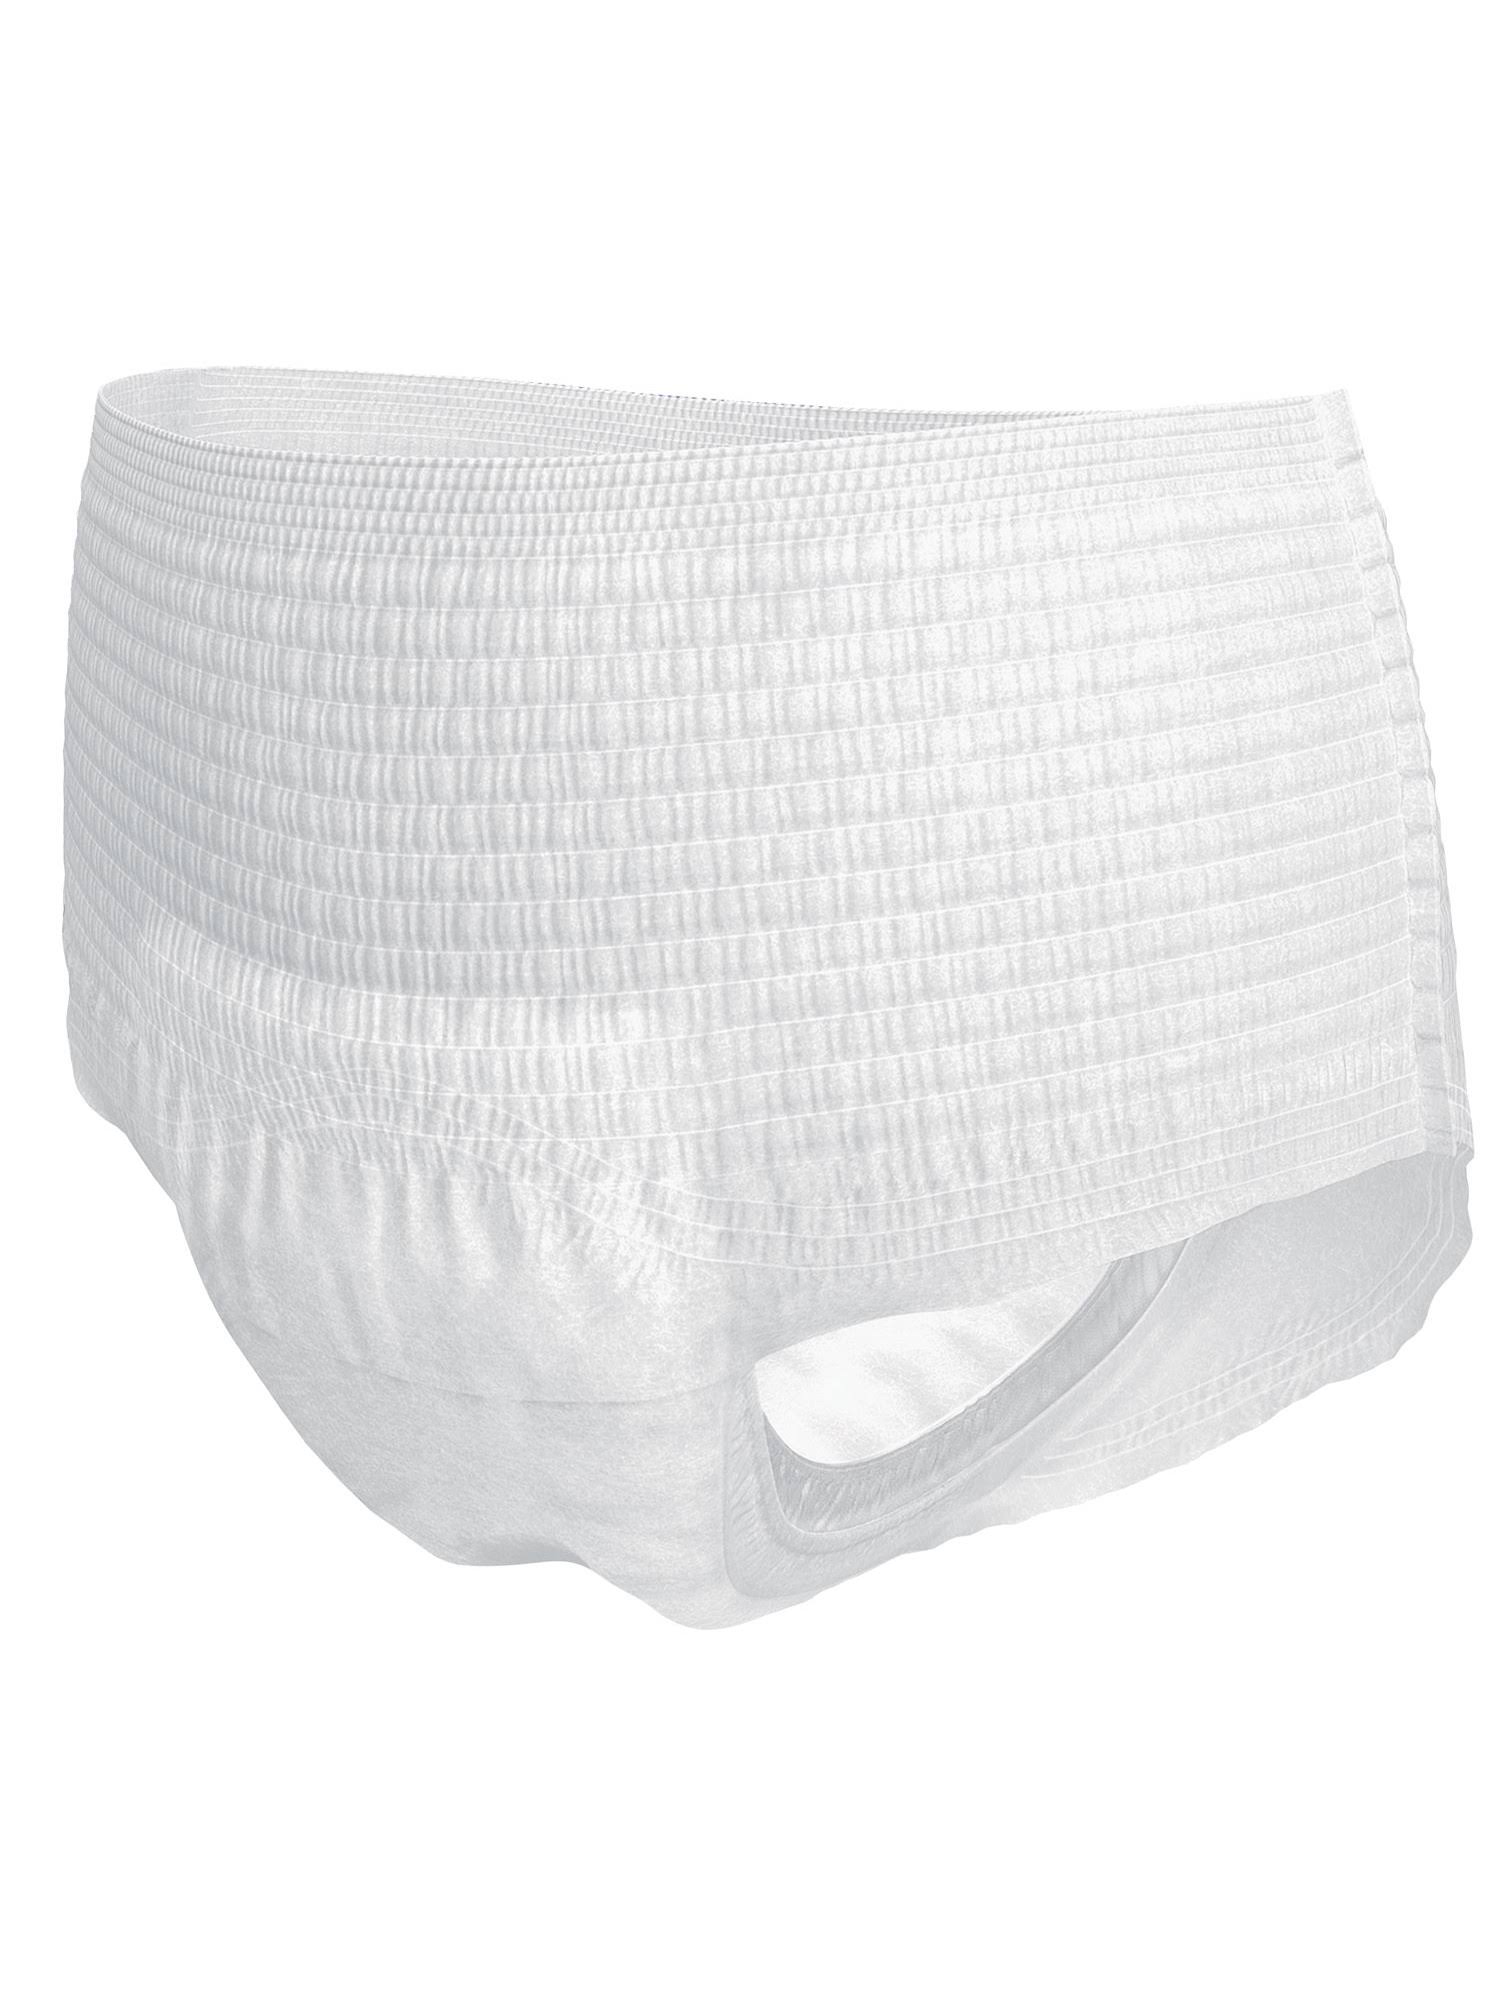 Tena Overnight Super Pull-on Underwear - Large